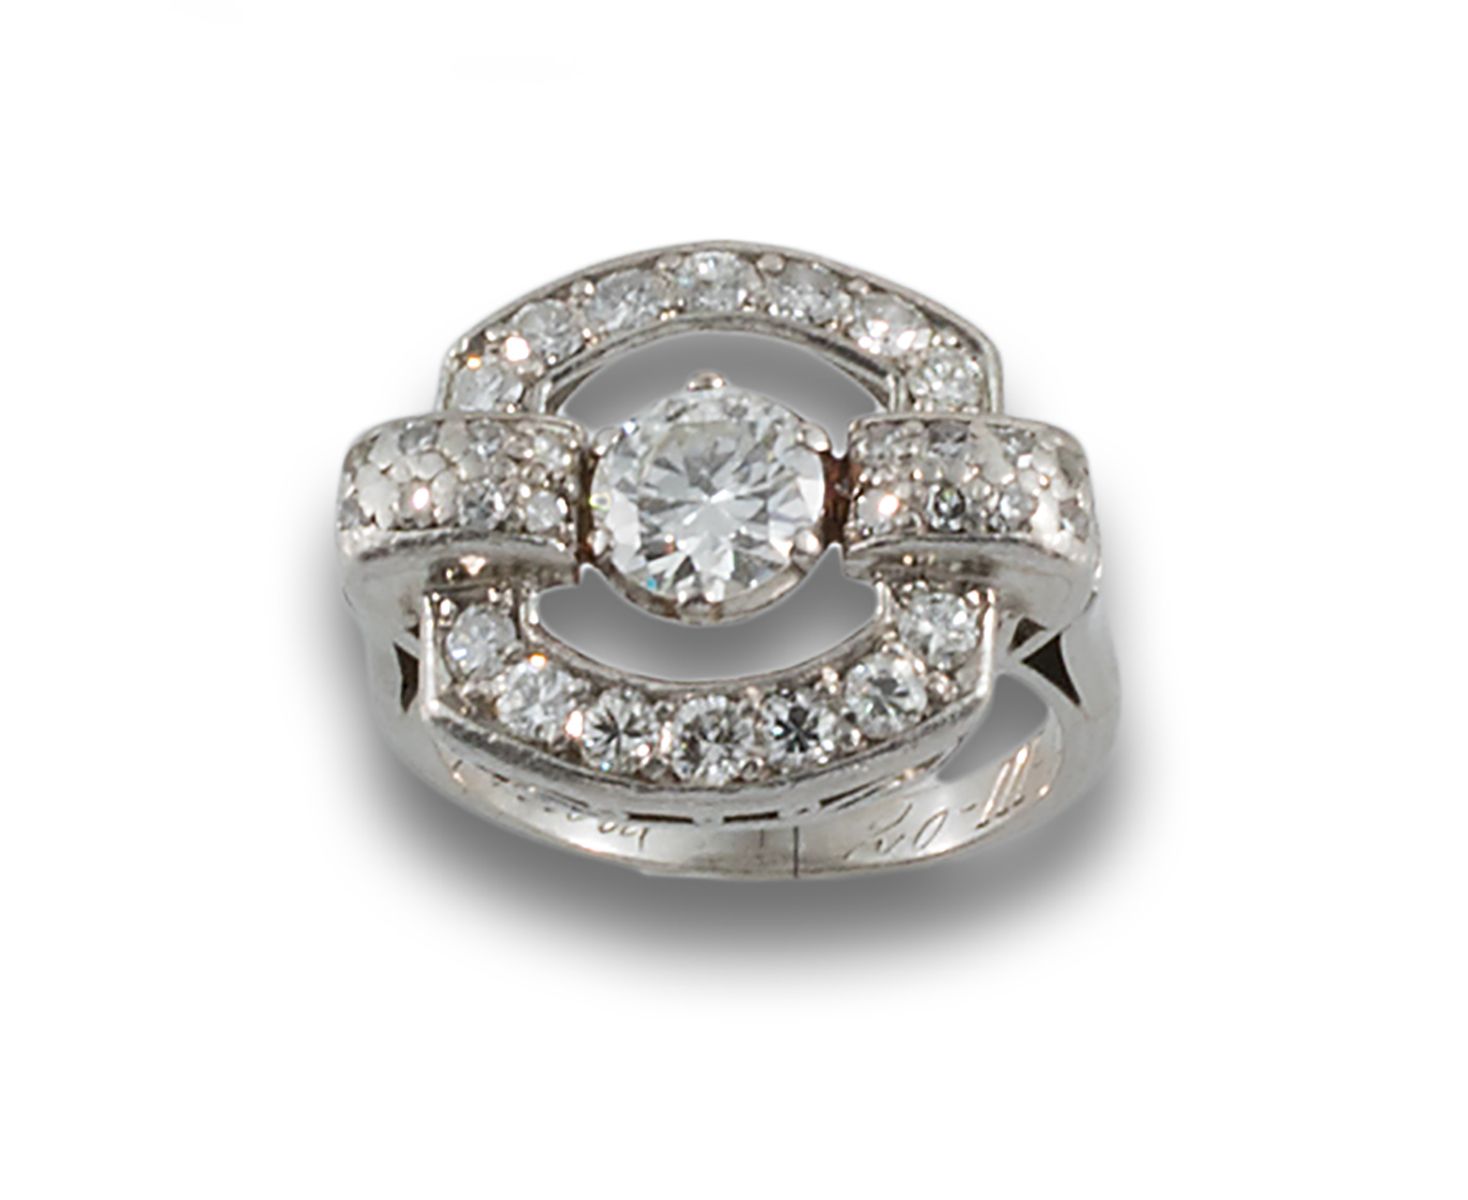 Ring, Art Deco style with openwork platinum setting. Broche Art nouveau en plati&hellip;